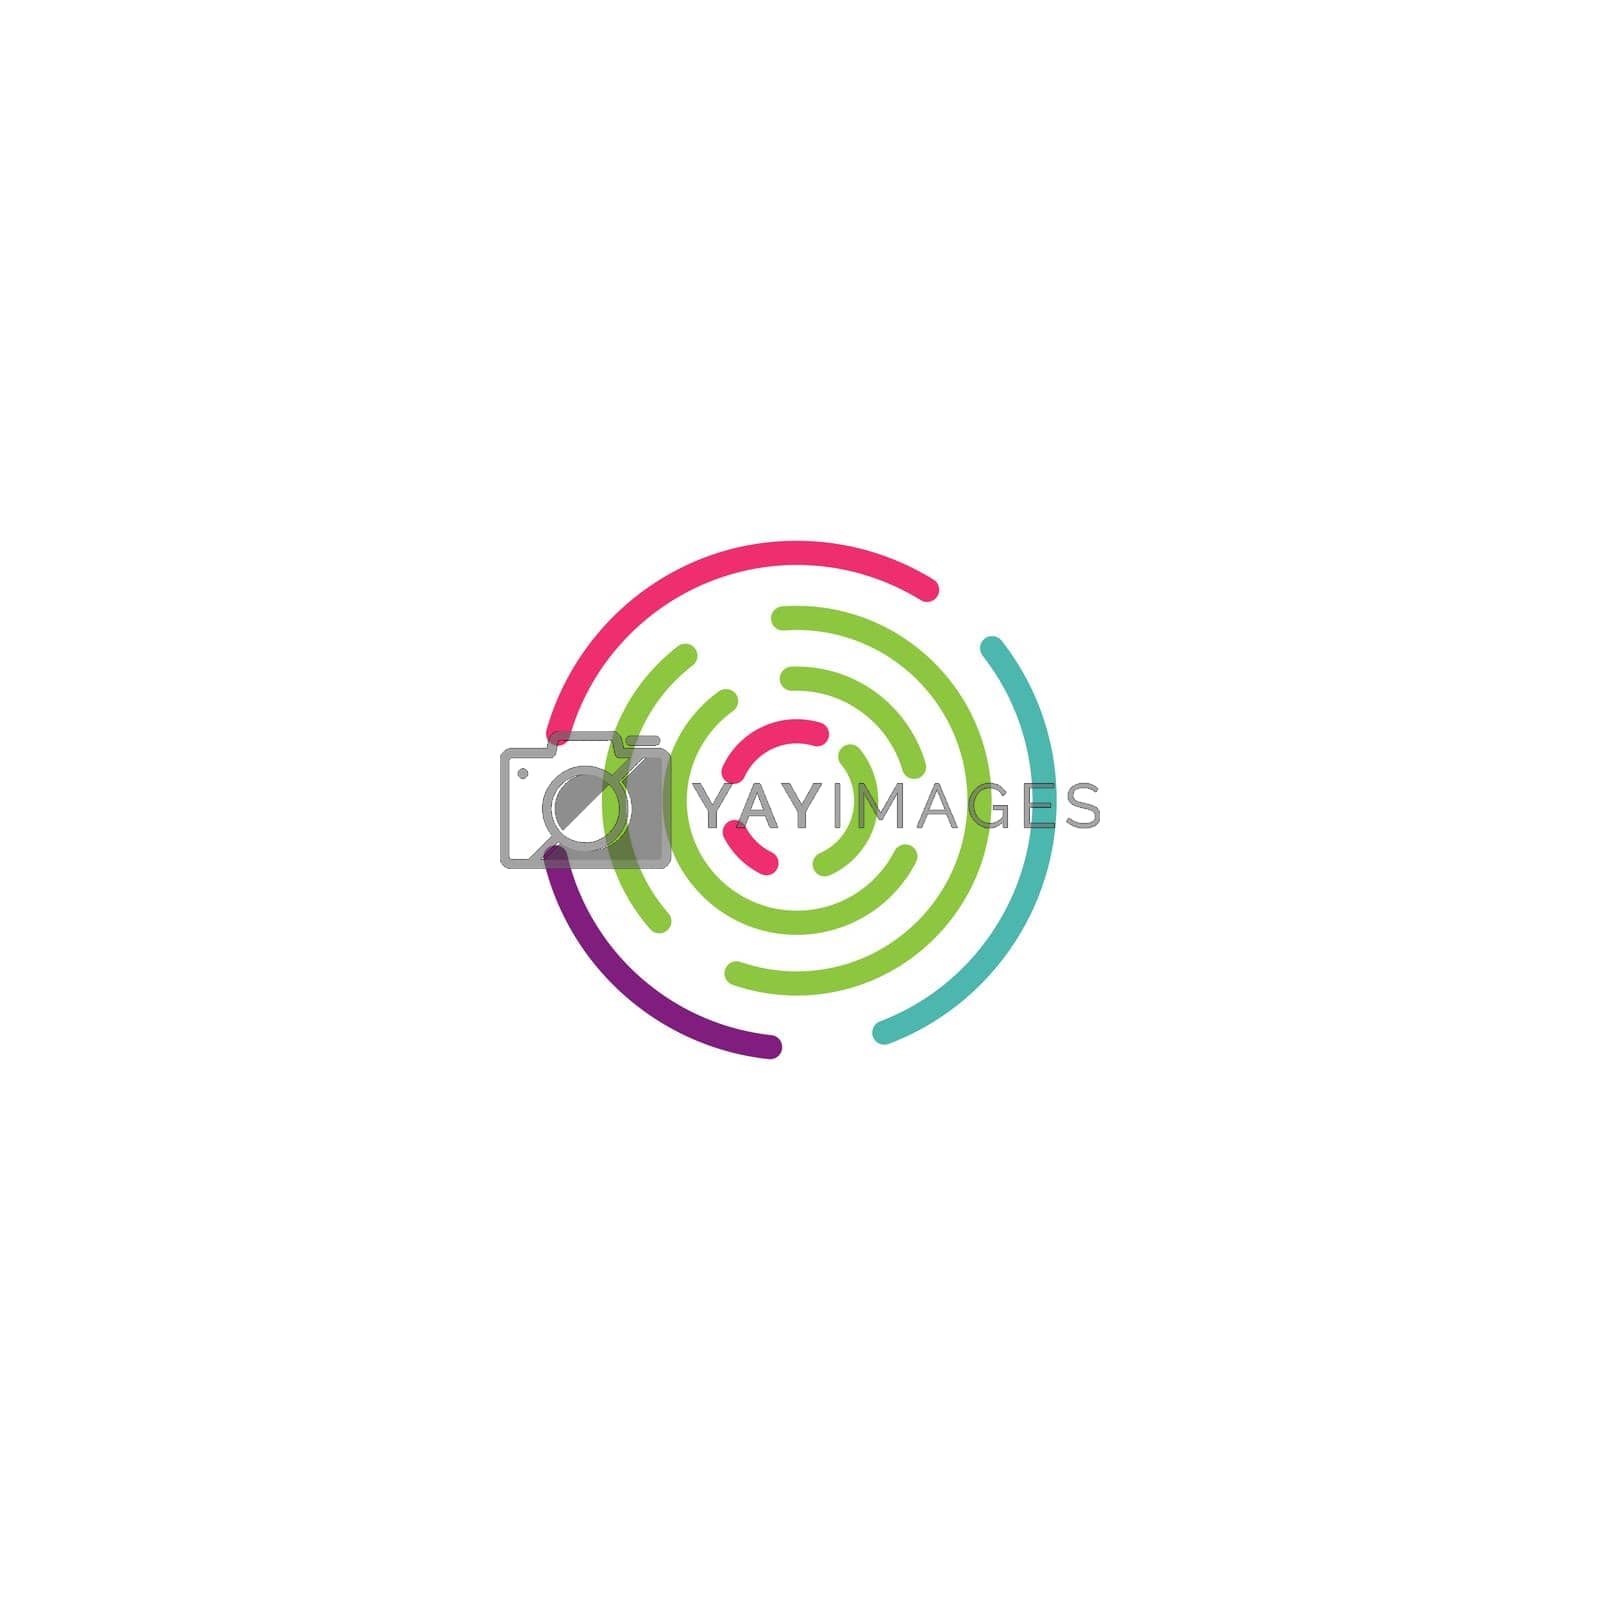 Royalty free image of Circular logo by awk